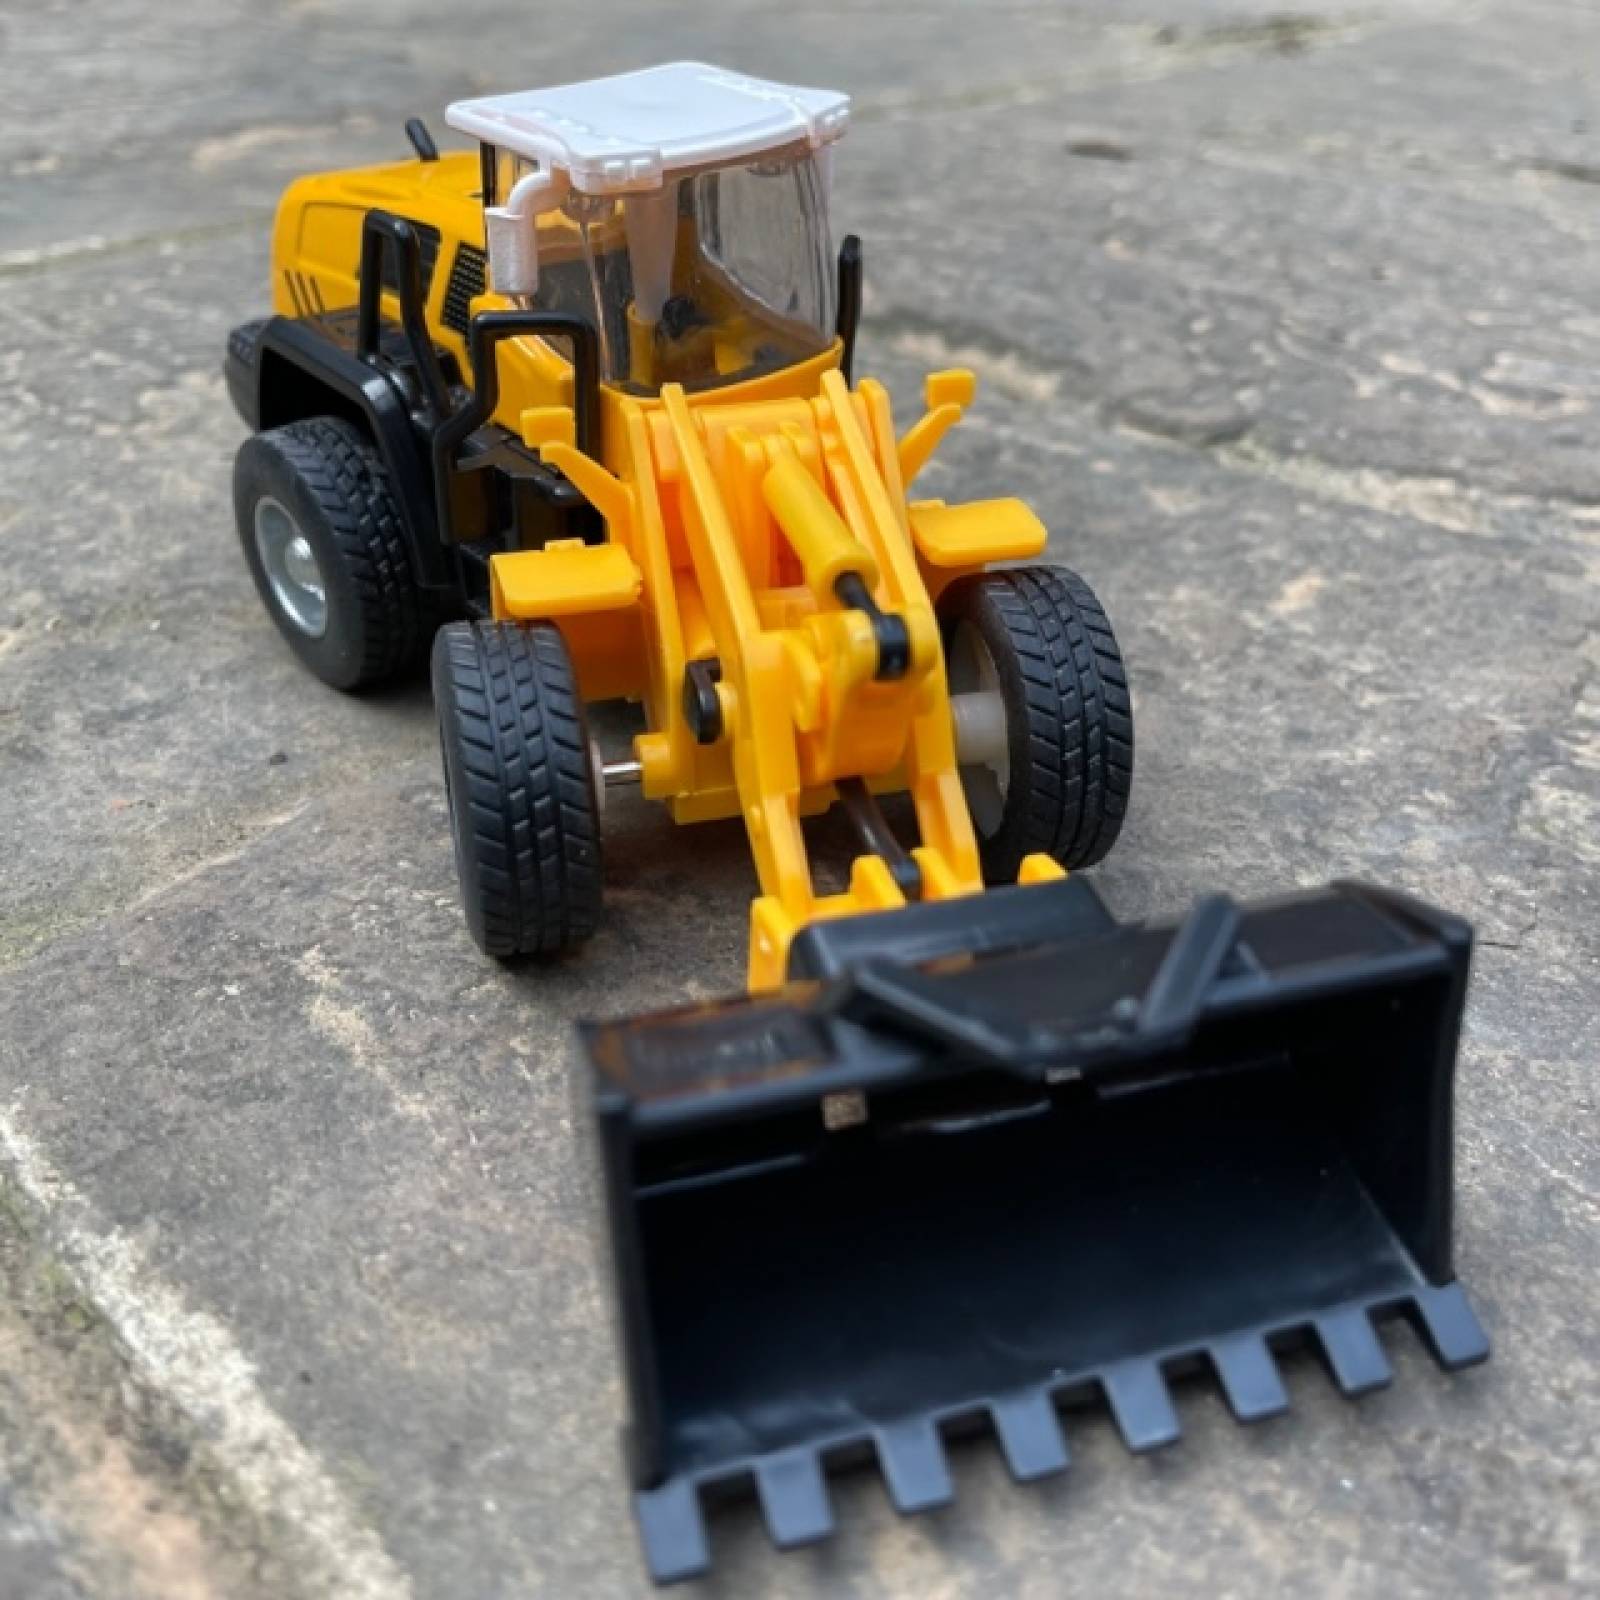 Loader Digger - Pull Back Die-Cast Toy Vehicle 3+ thumbnails